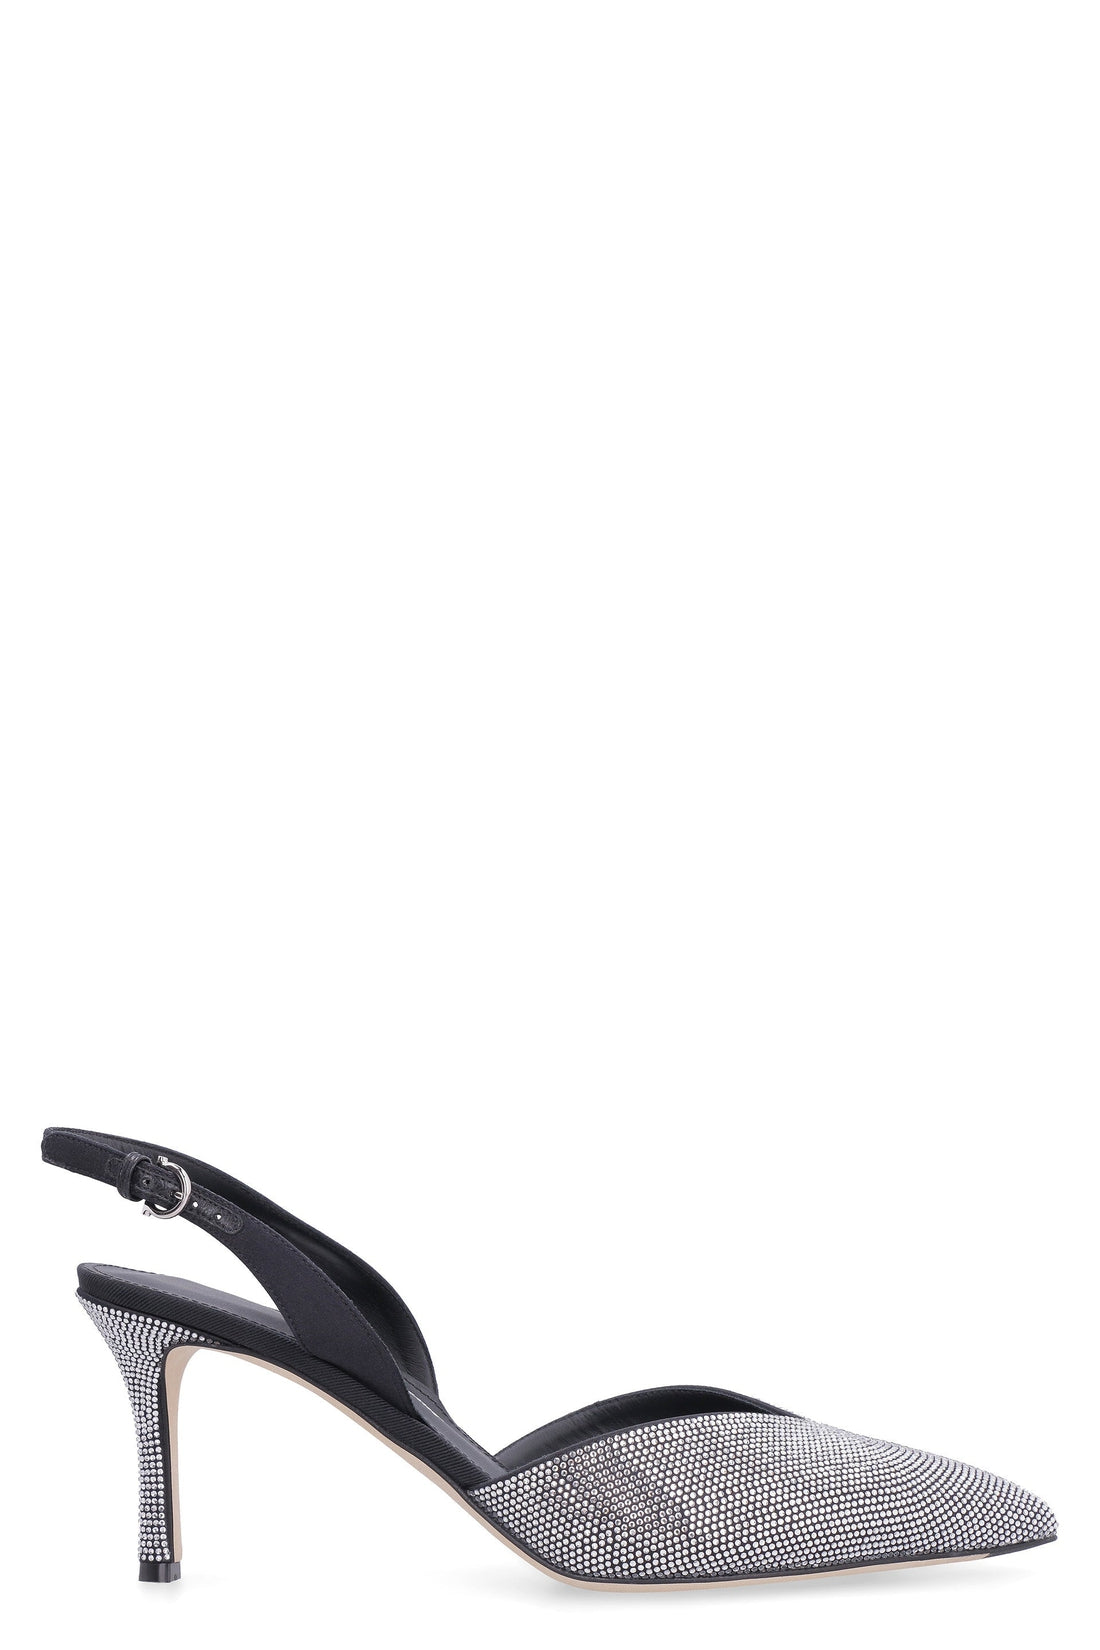 Salvatore Ferragamo-OUTLET-SALE-Embellished pointy-toe slingback pumps-ARCHIVIST